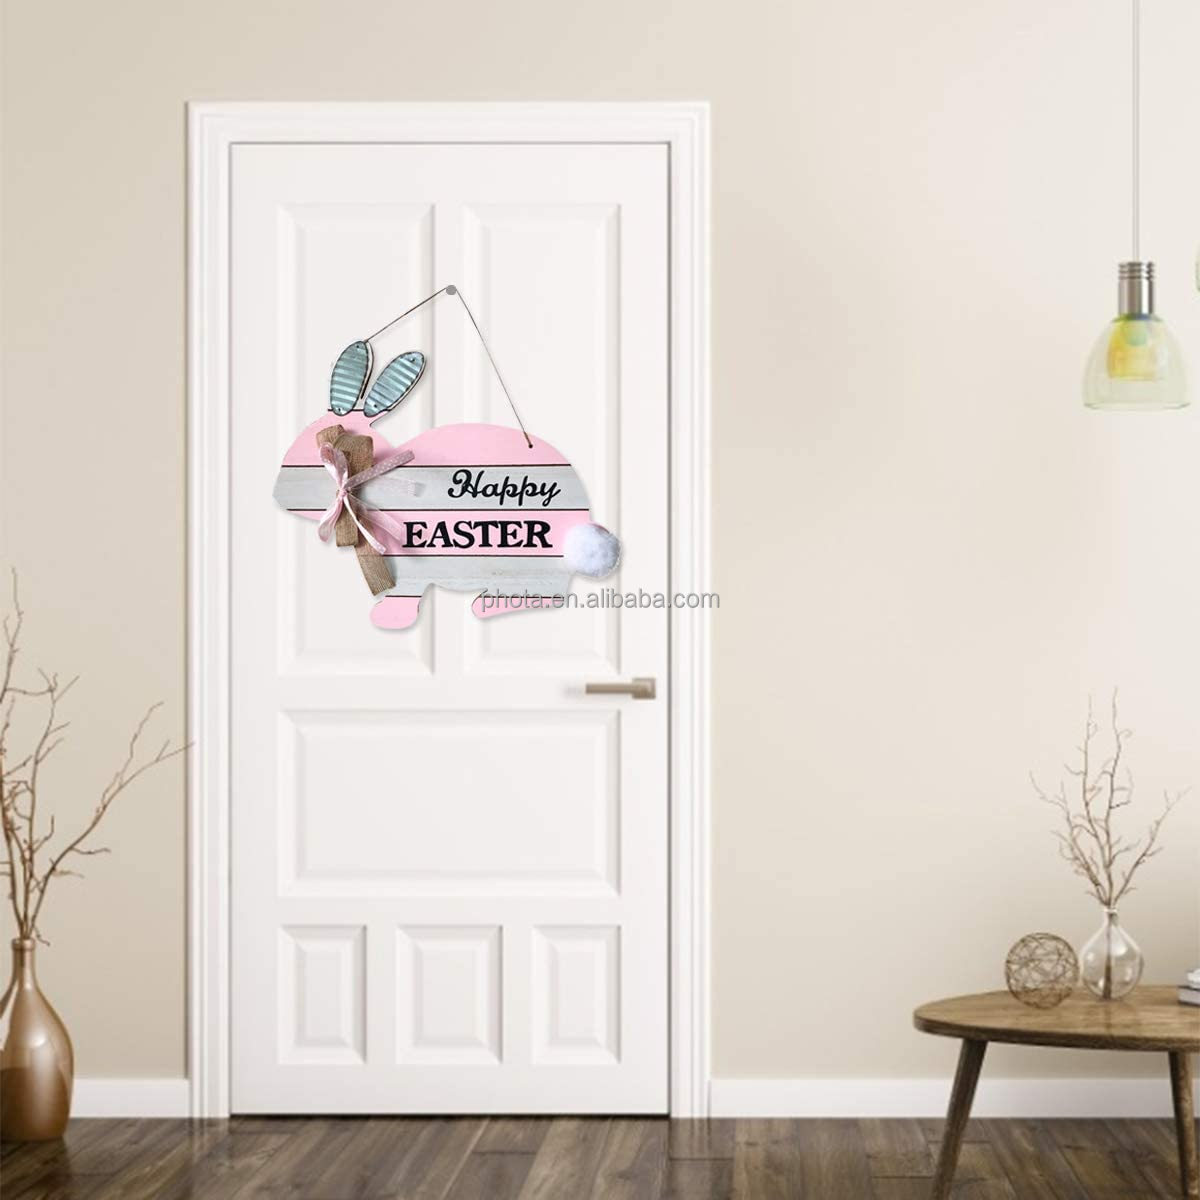 Easter Bunny Wall Hanging Decoration, Wood Seasonal Welcome Sign Front Door Decor for Home Indoor Outdoor